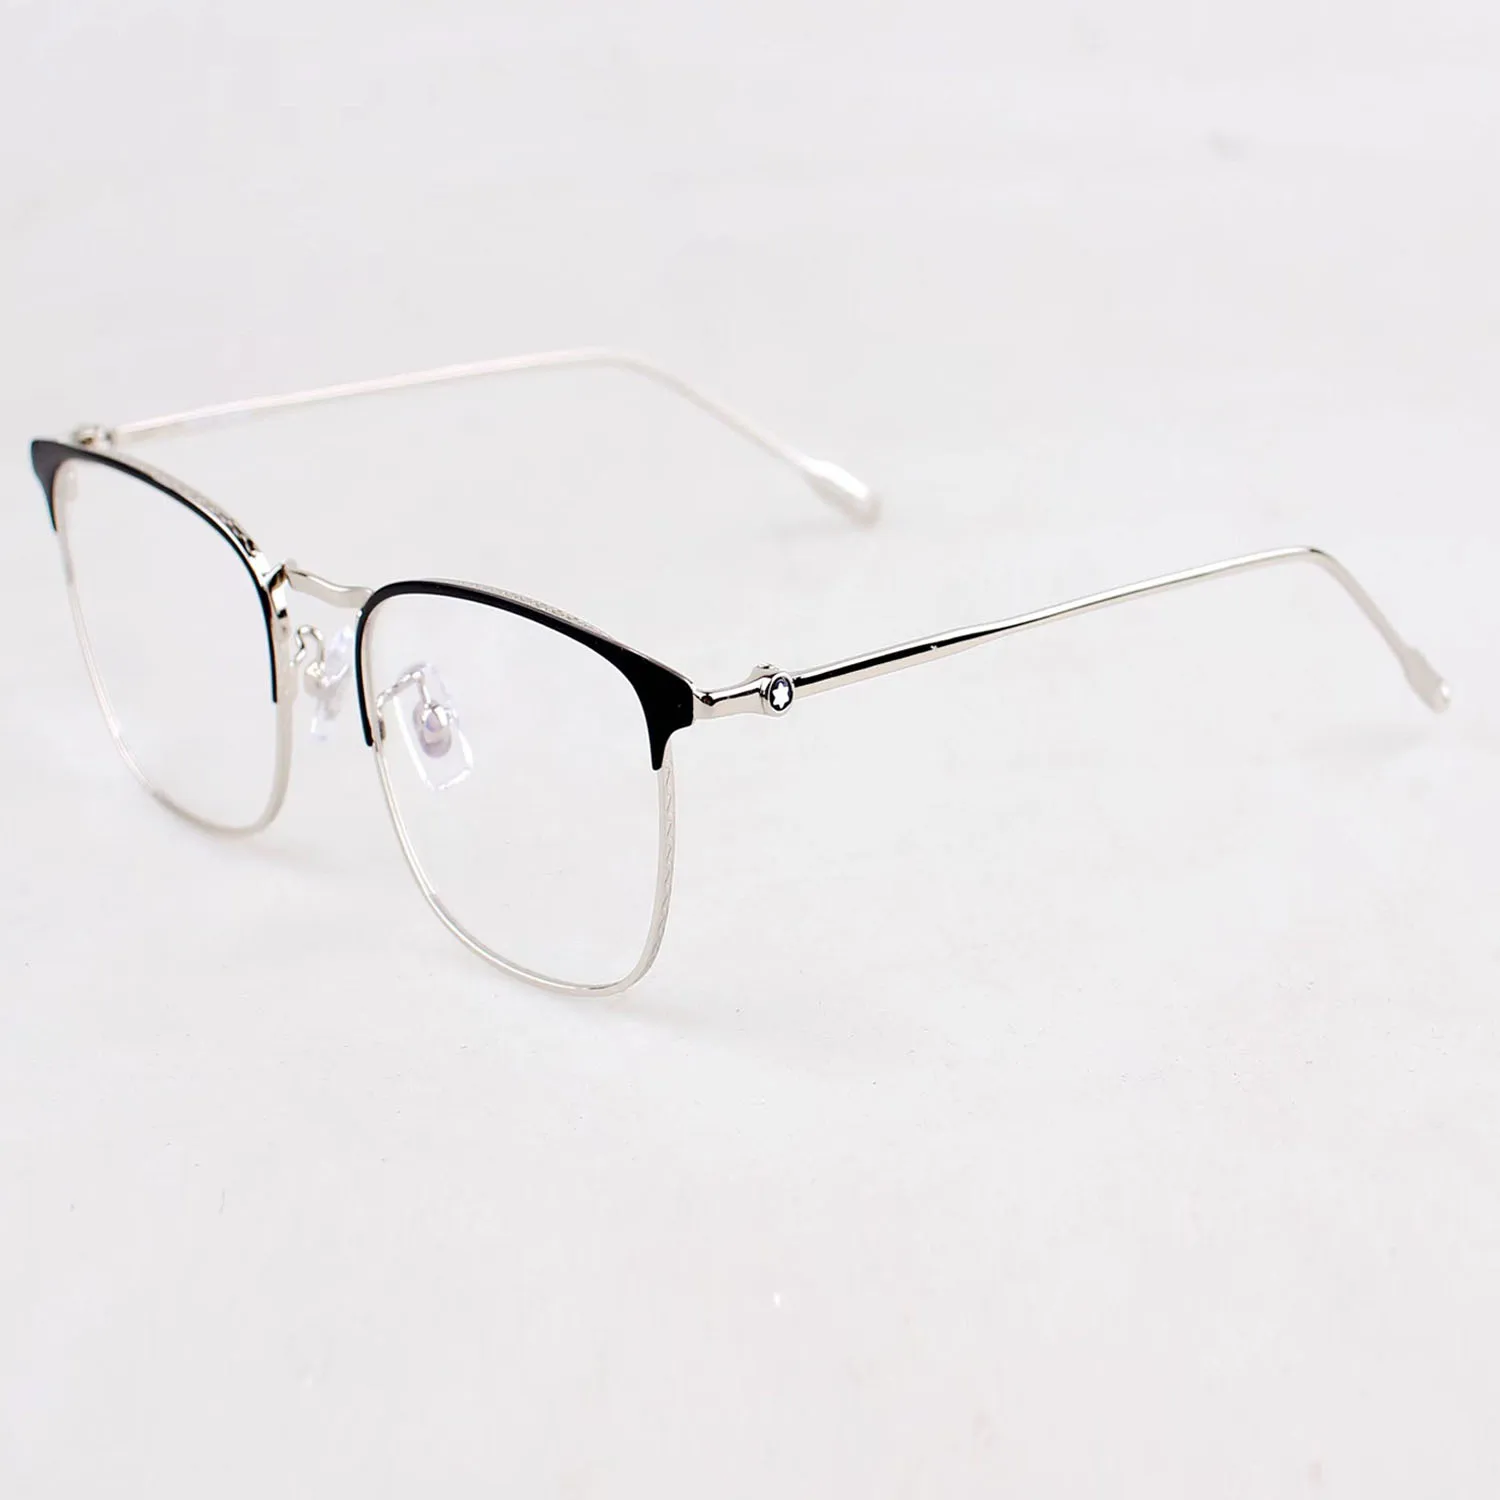 

Germany Hexagonal Brand Luxury Retro Half-rim Light Glasses Frame Men Women High Quality Prescription Eyeglasses Frames MB0192O